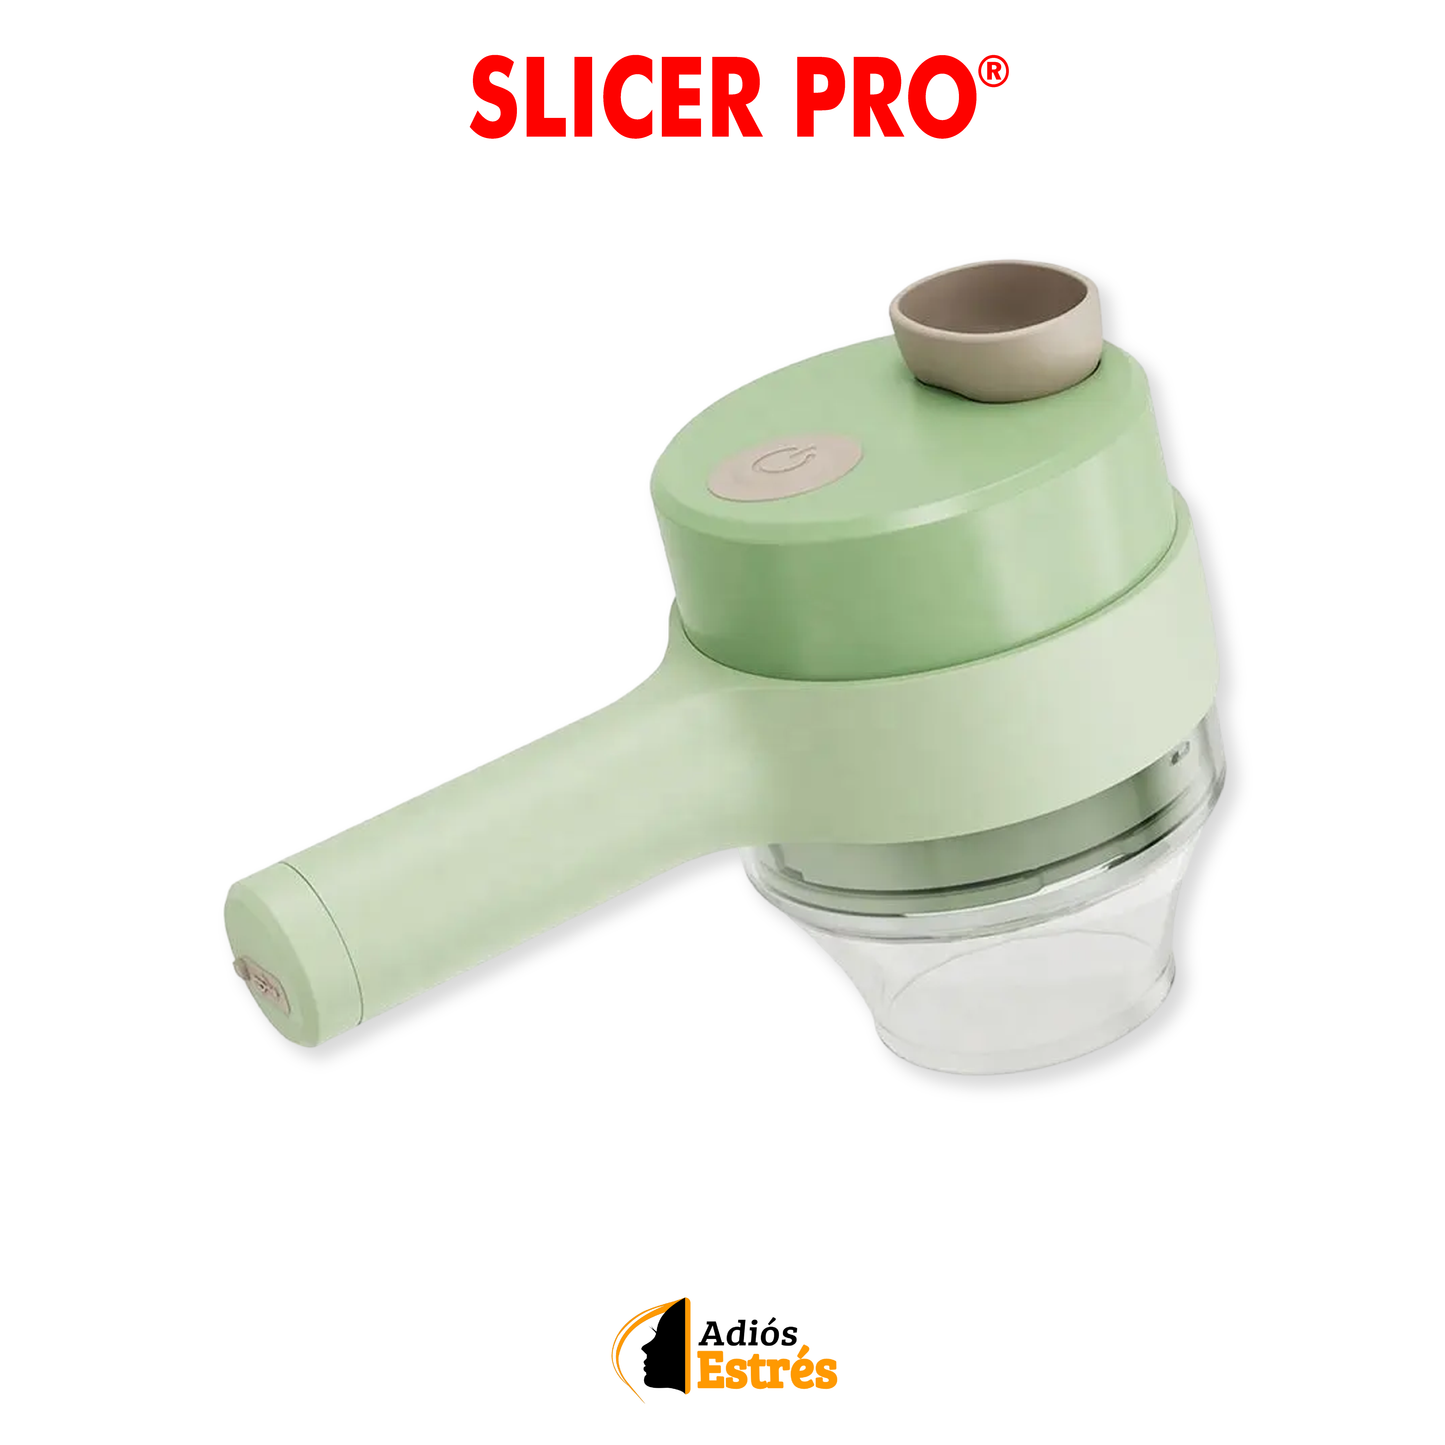 Slicer Pro®